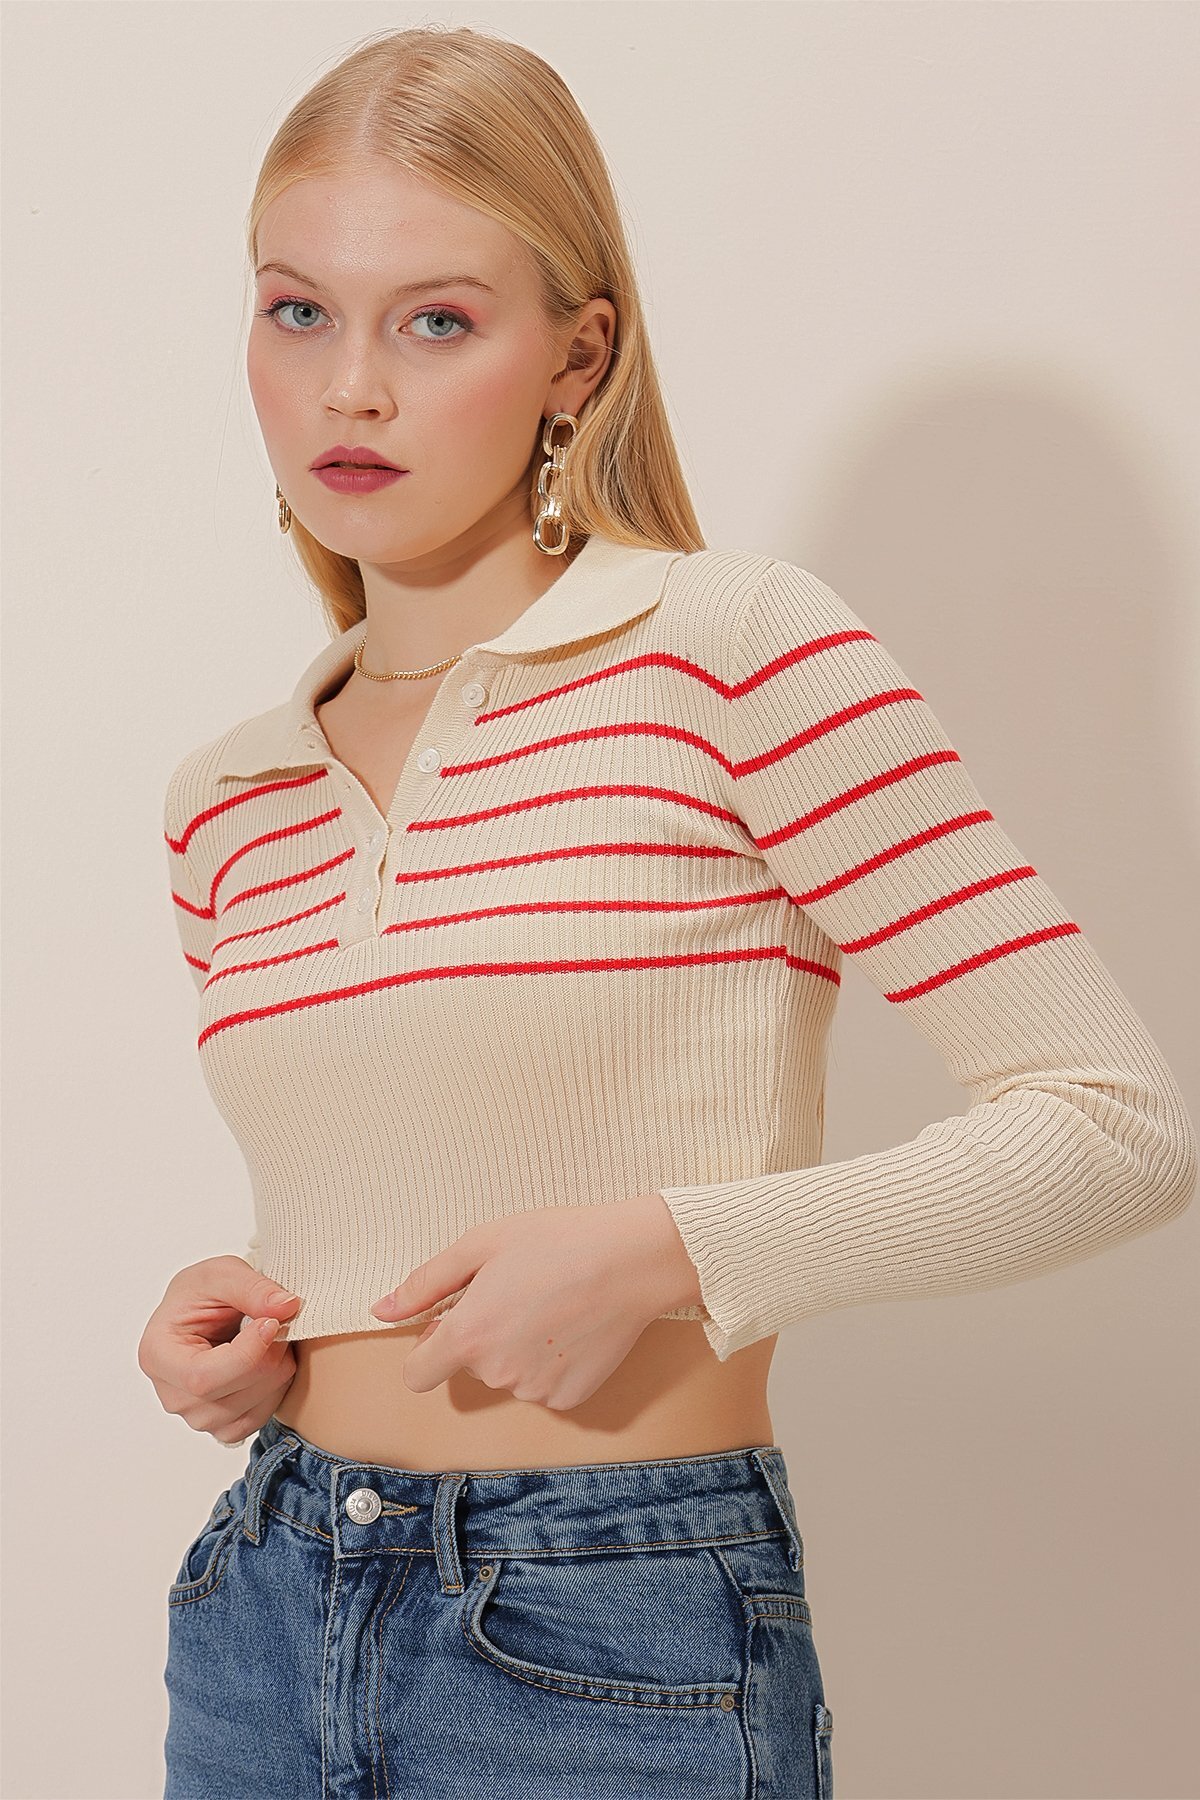 HAKKE Polo Neck Top Striped Knitwear Blouse